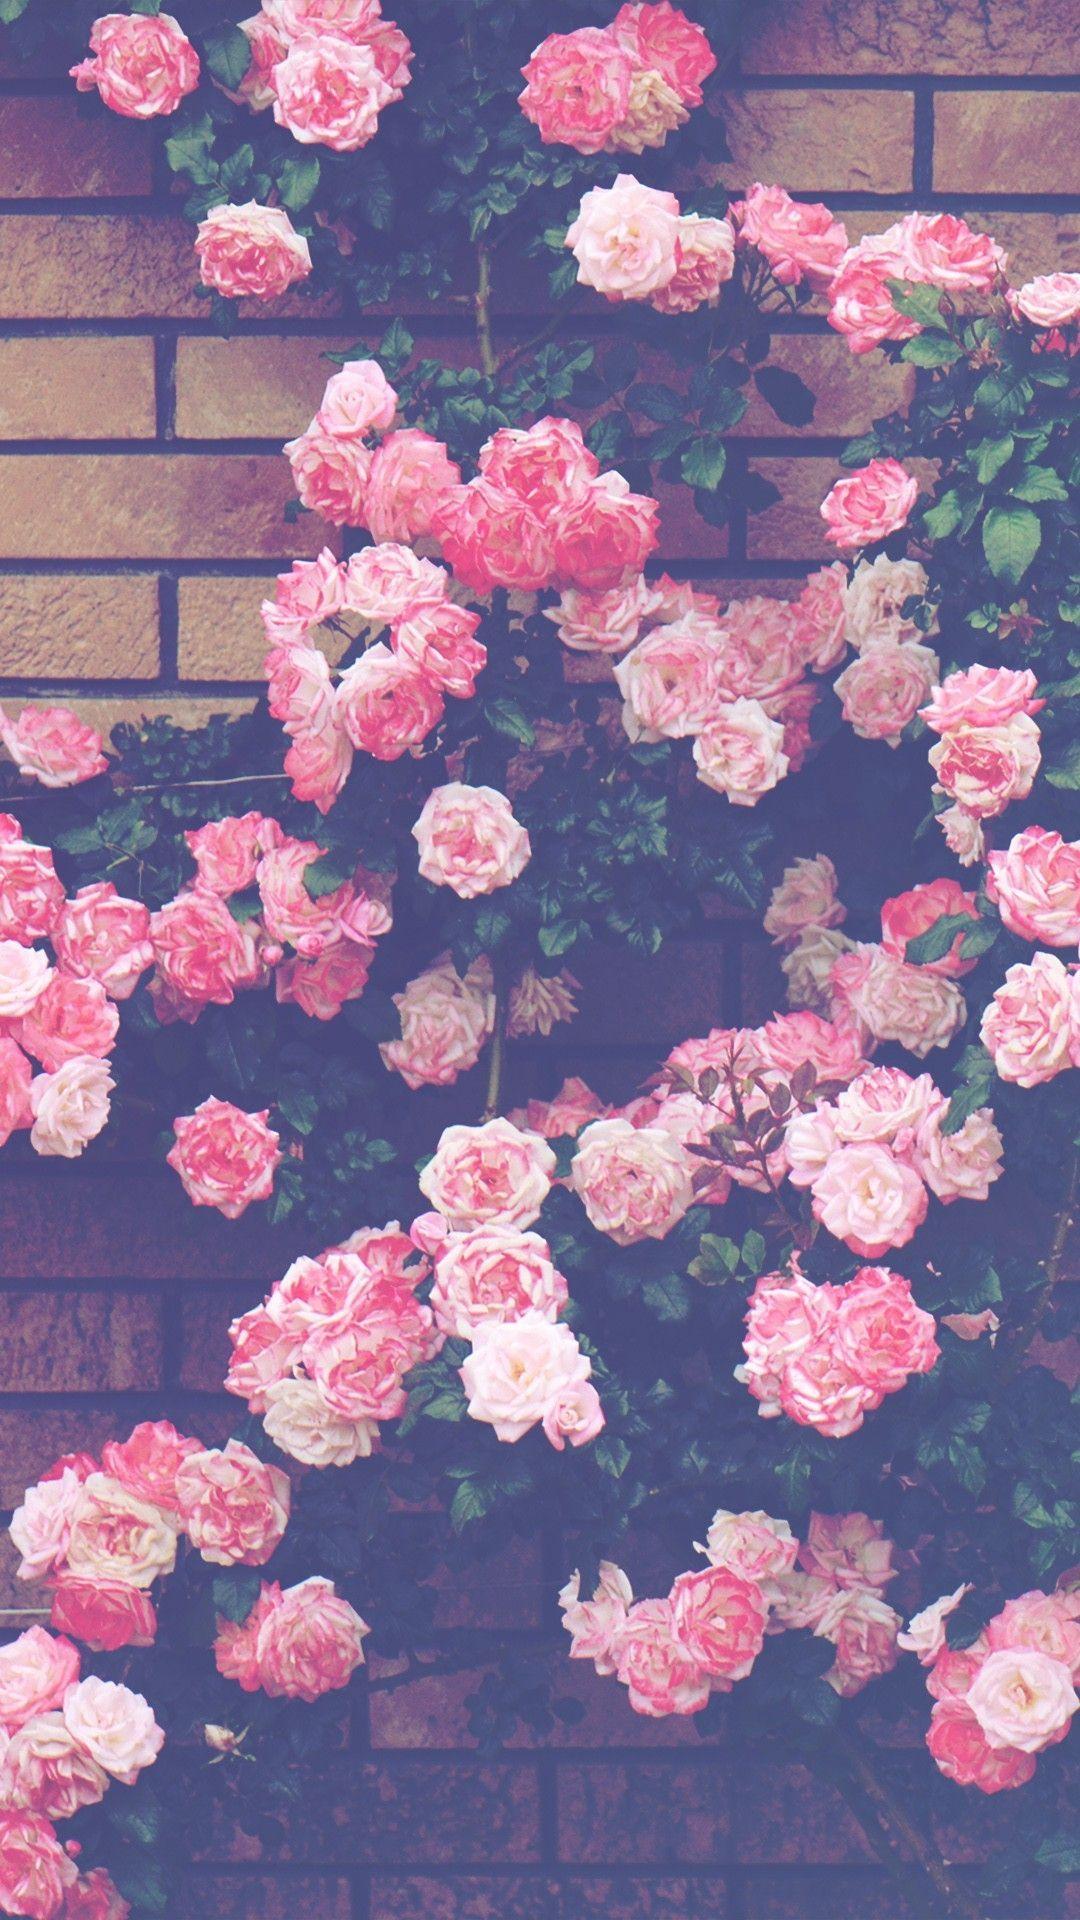  Rosa Rosen Hintergrundbild 1080x1920. Pink Roses Aesthetic Wallpaper